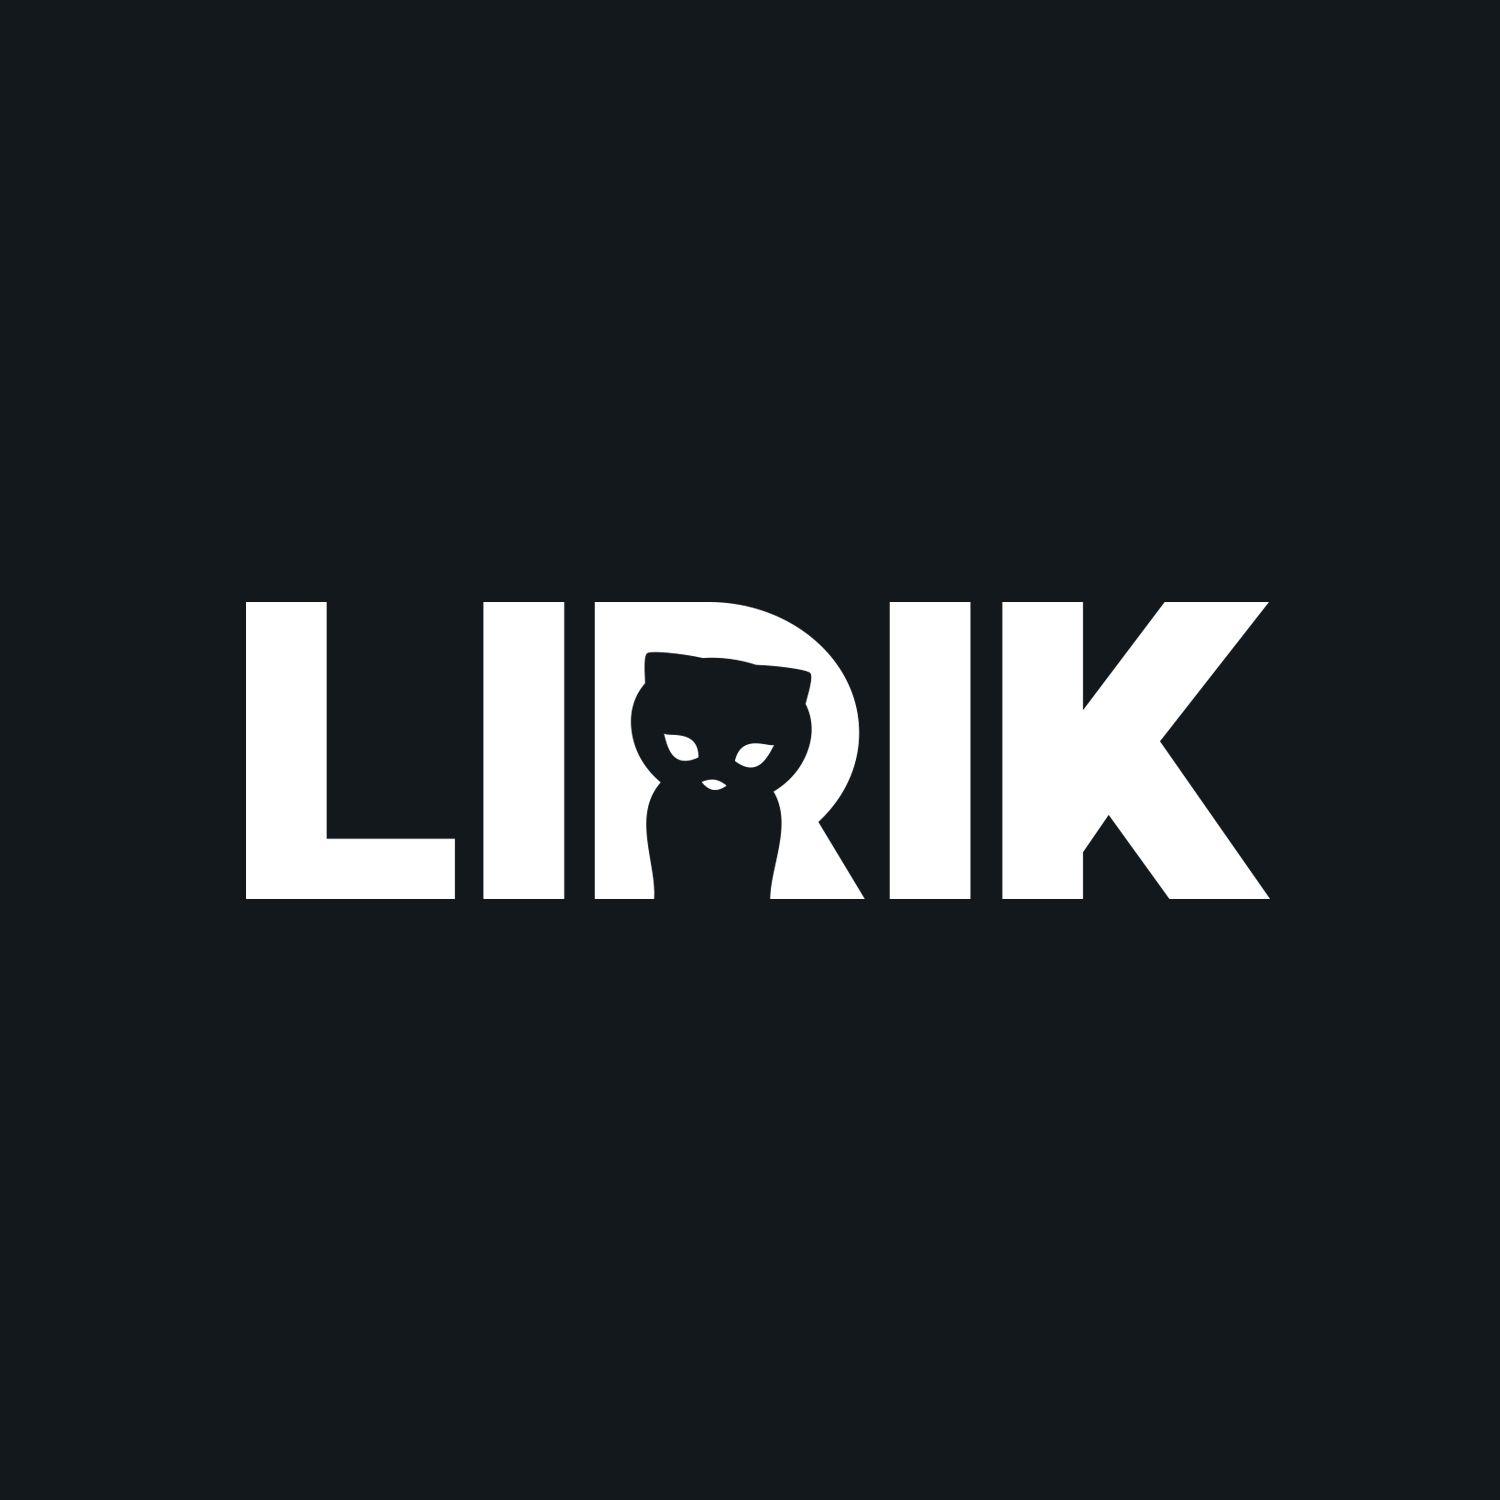 Twitch Streamer Logo - HyperX Announces Sponsorship of LIRIK, World's #1 Twitch Streamer ...